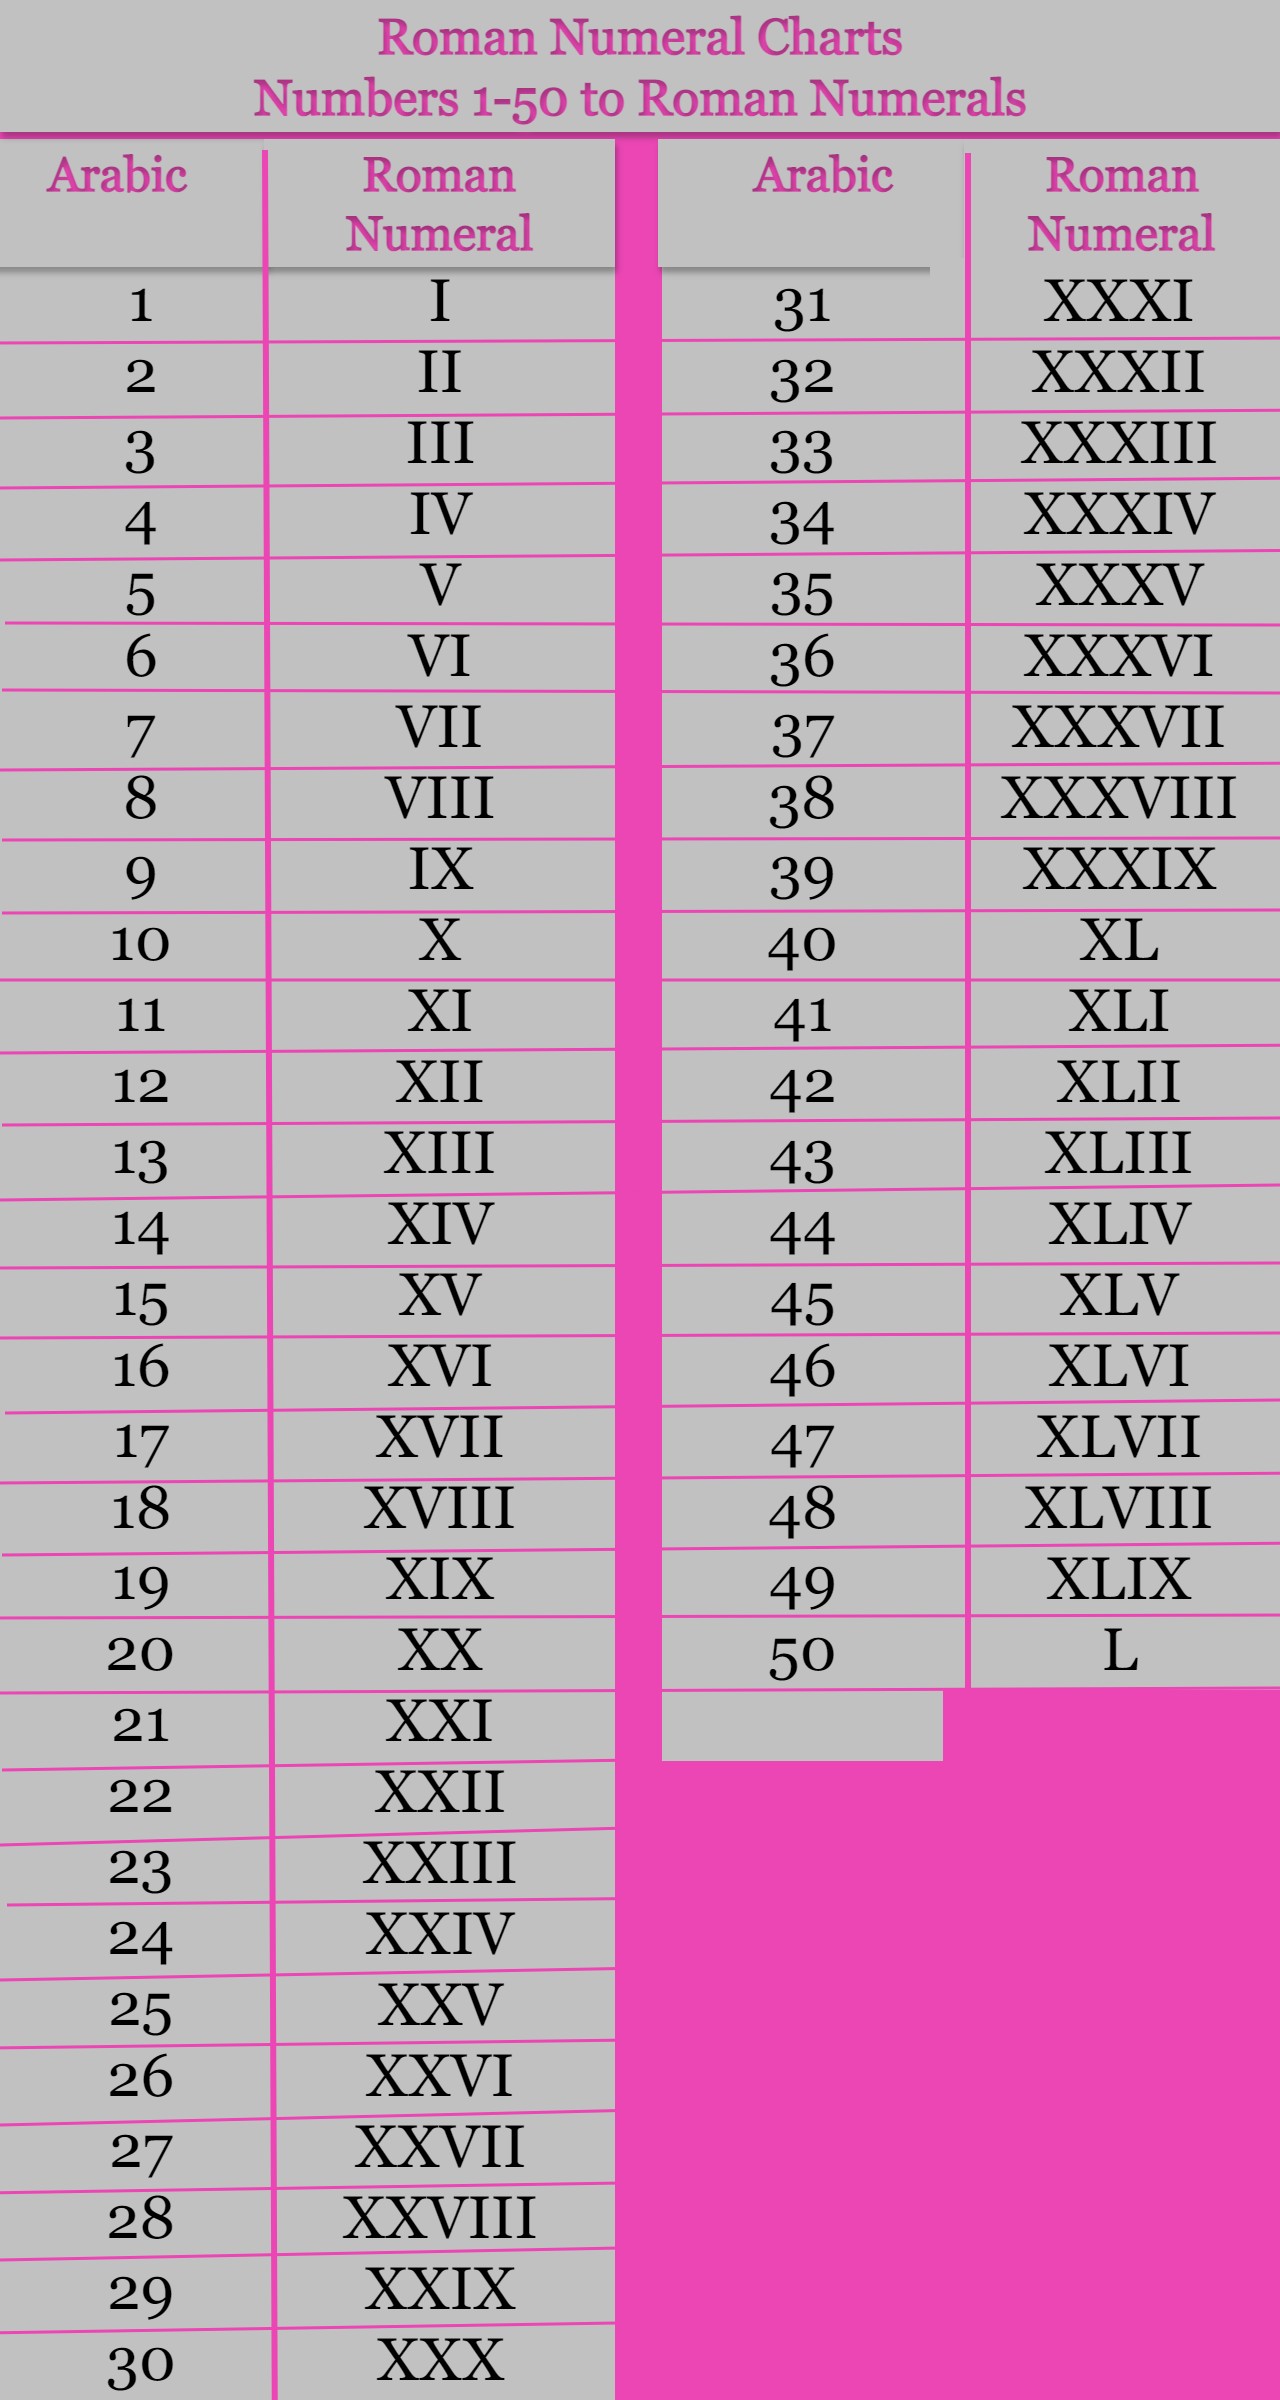 Roman Numeral Charts